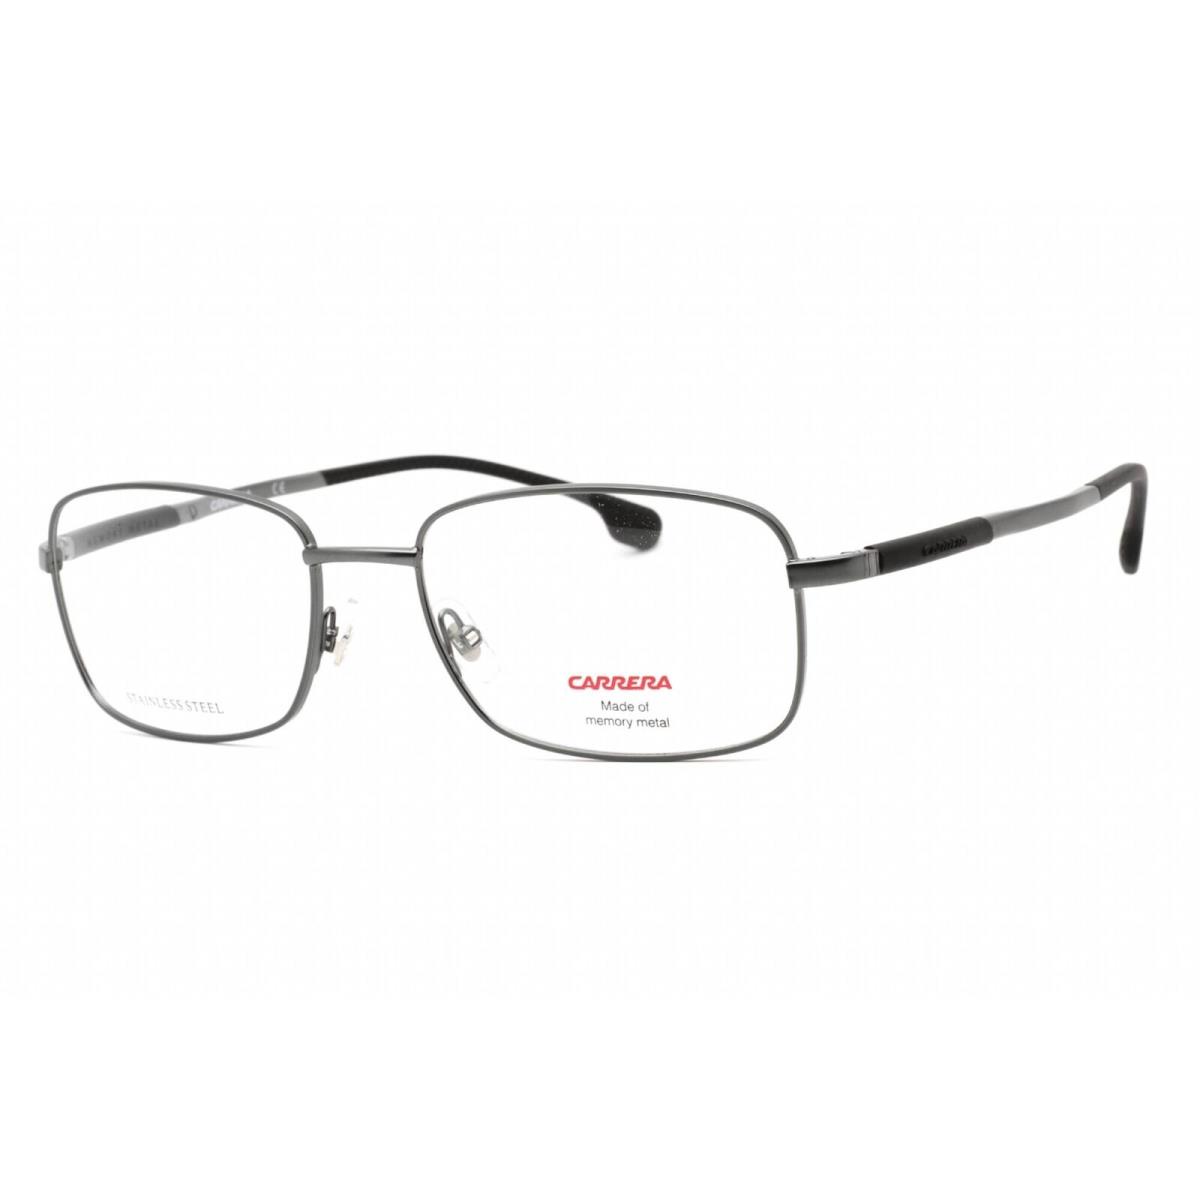 Carrera Men`s Eyeglasses Matte Dark Ruthenium Rectangular Carrera 8848 0R80 00